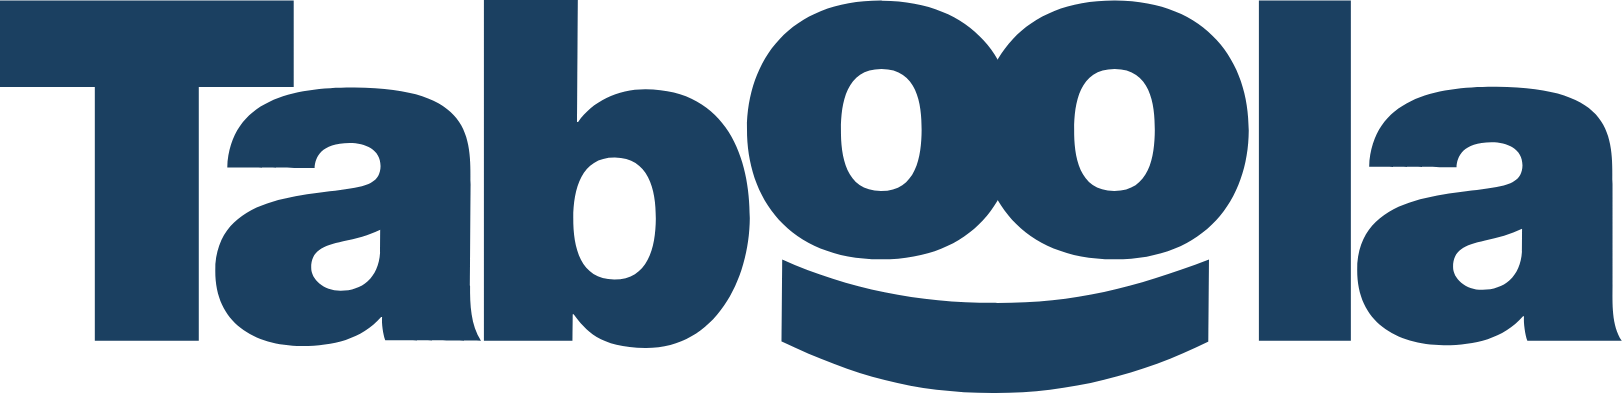 Taboola.com logo large (transparent PNG)